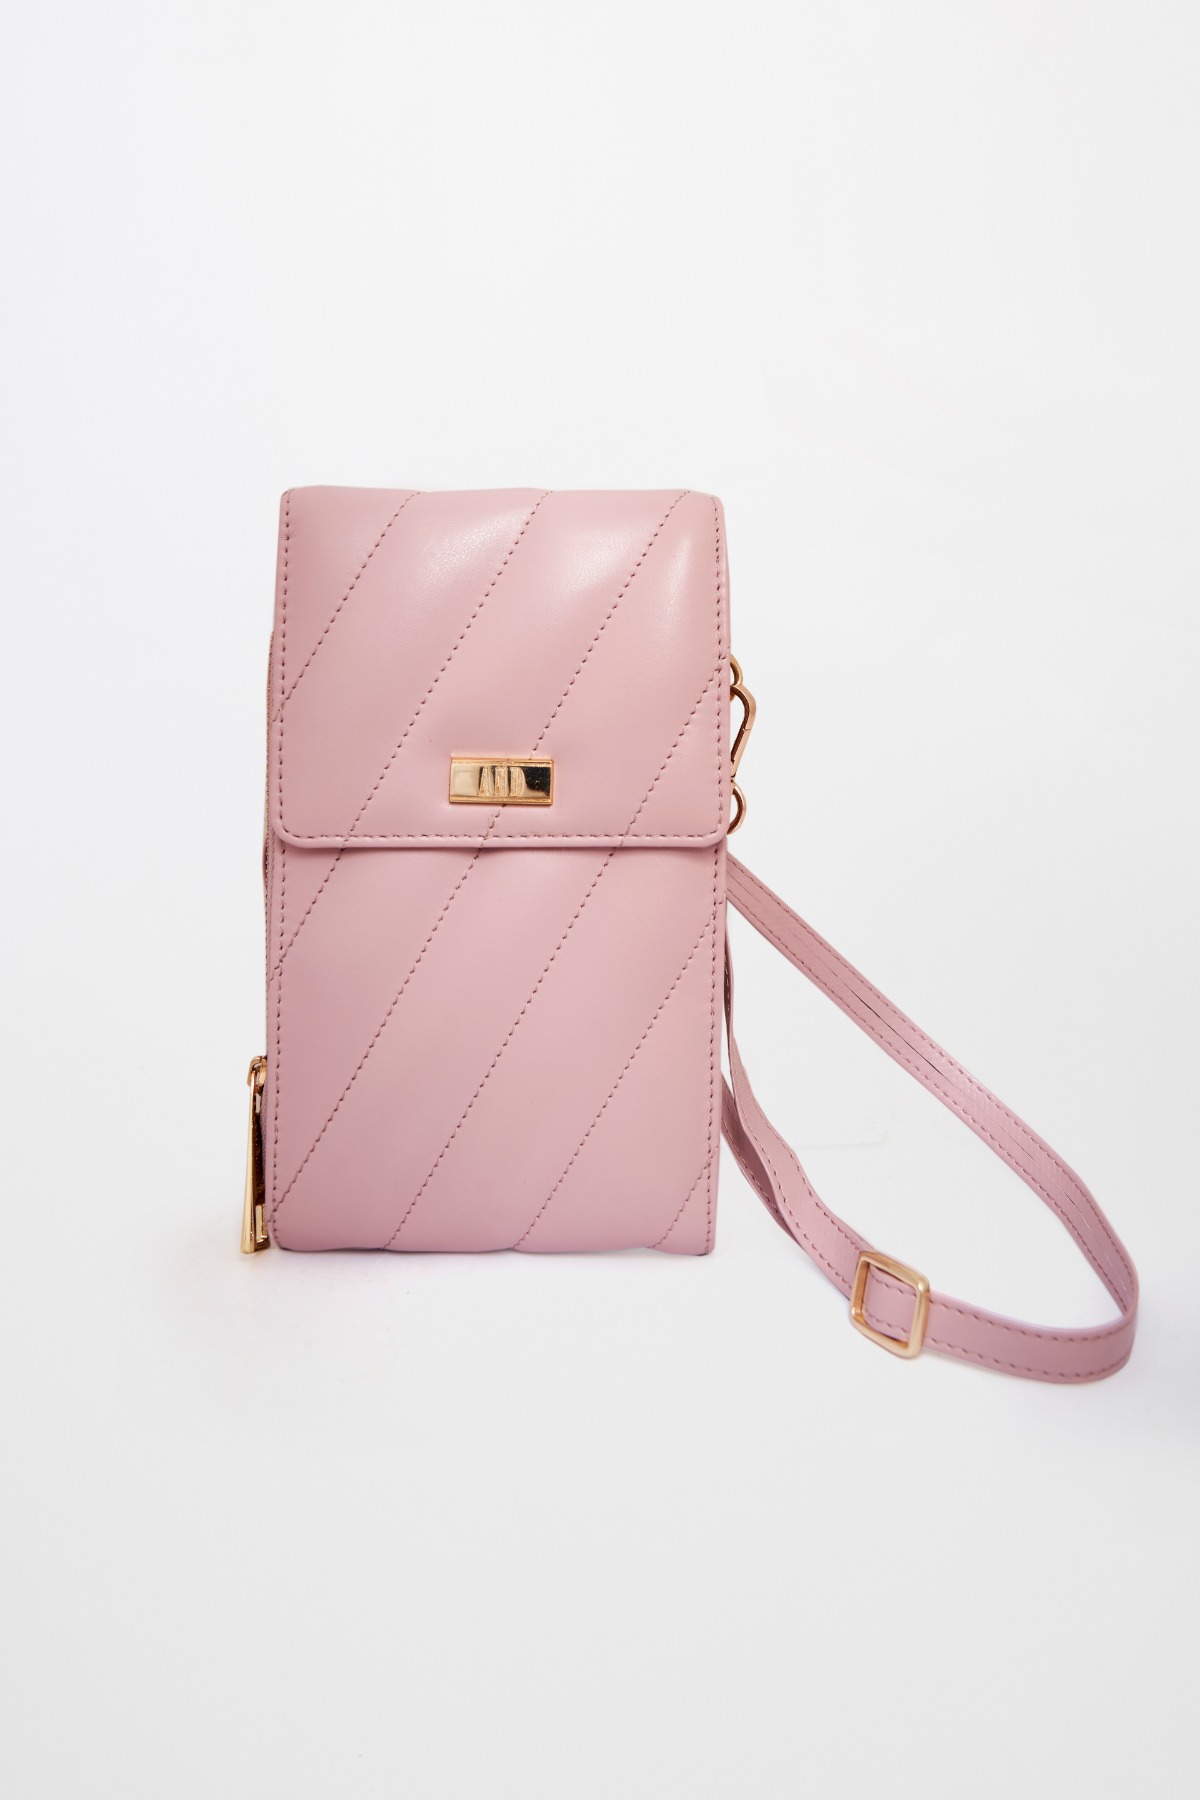 3 - Pink Handbag, image 3